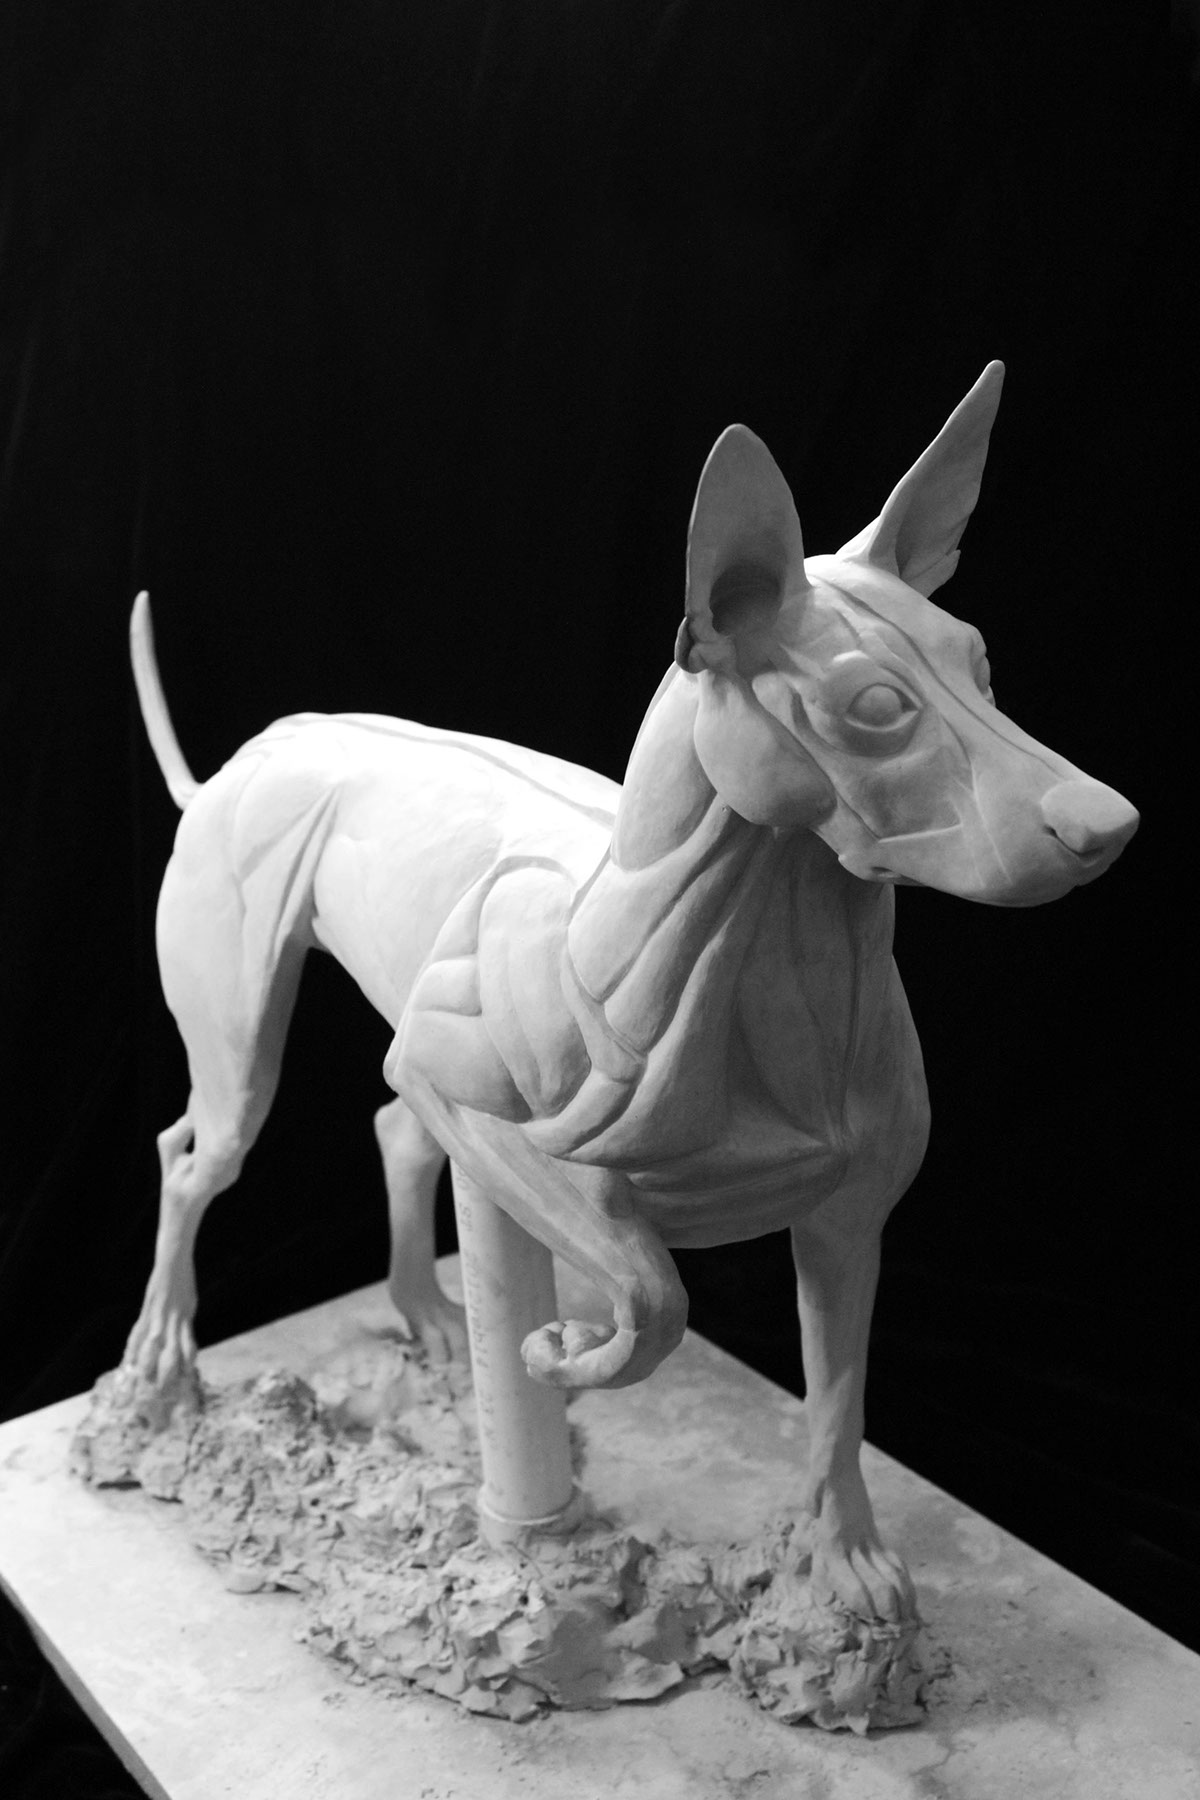 dog animal anatomy sculpture muscles skin